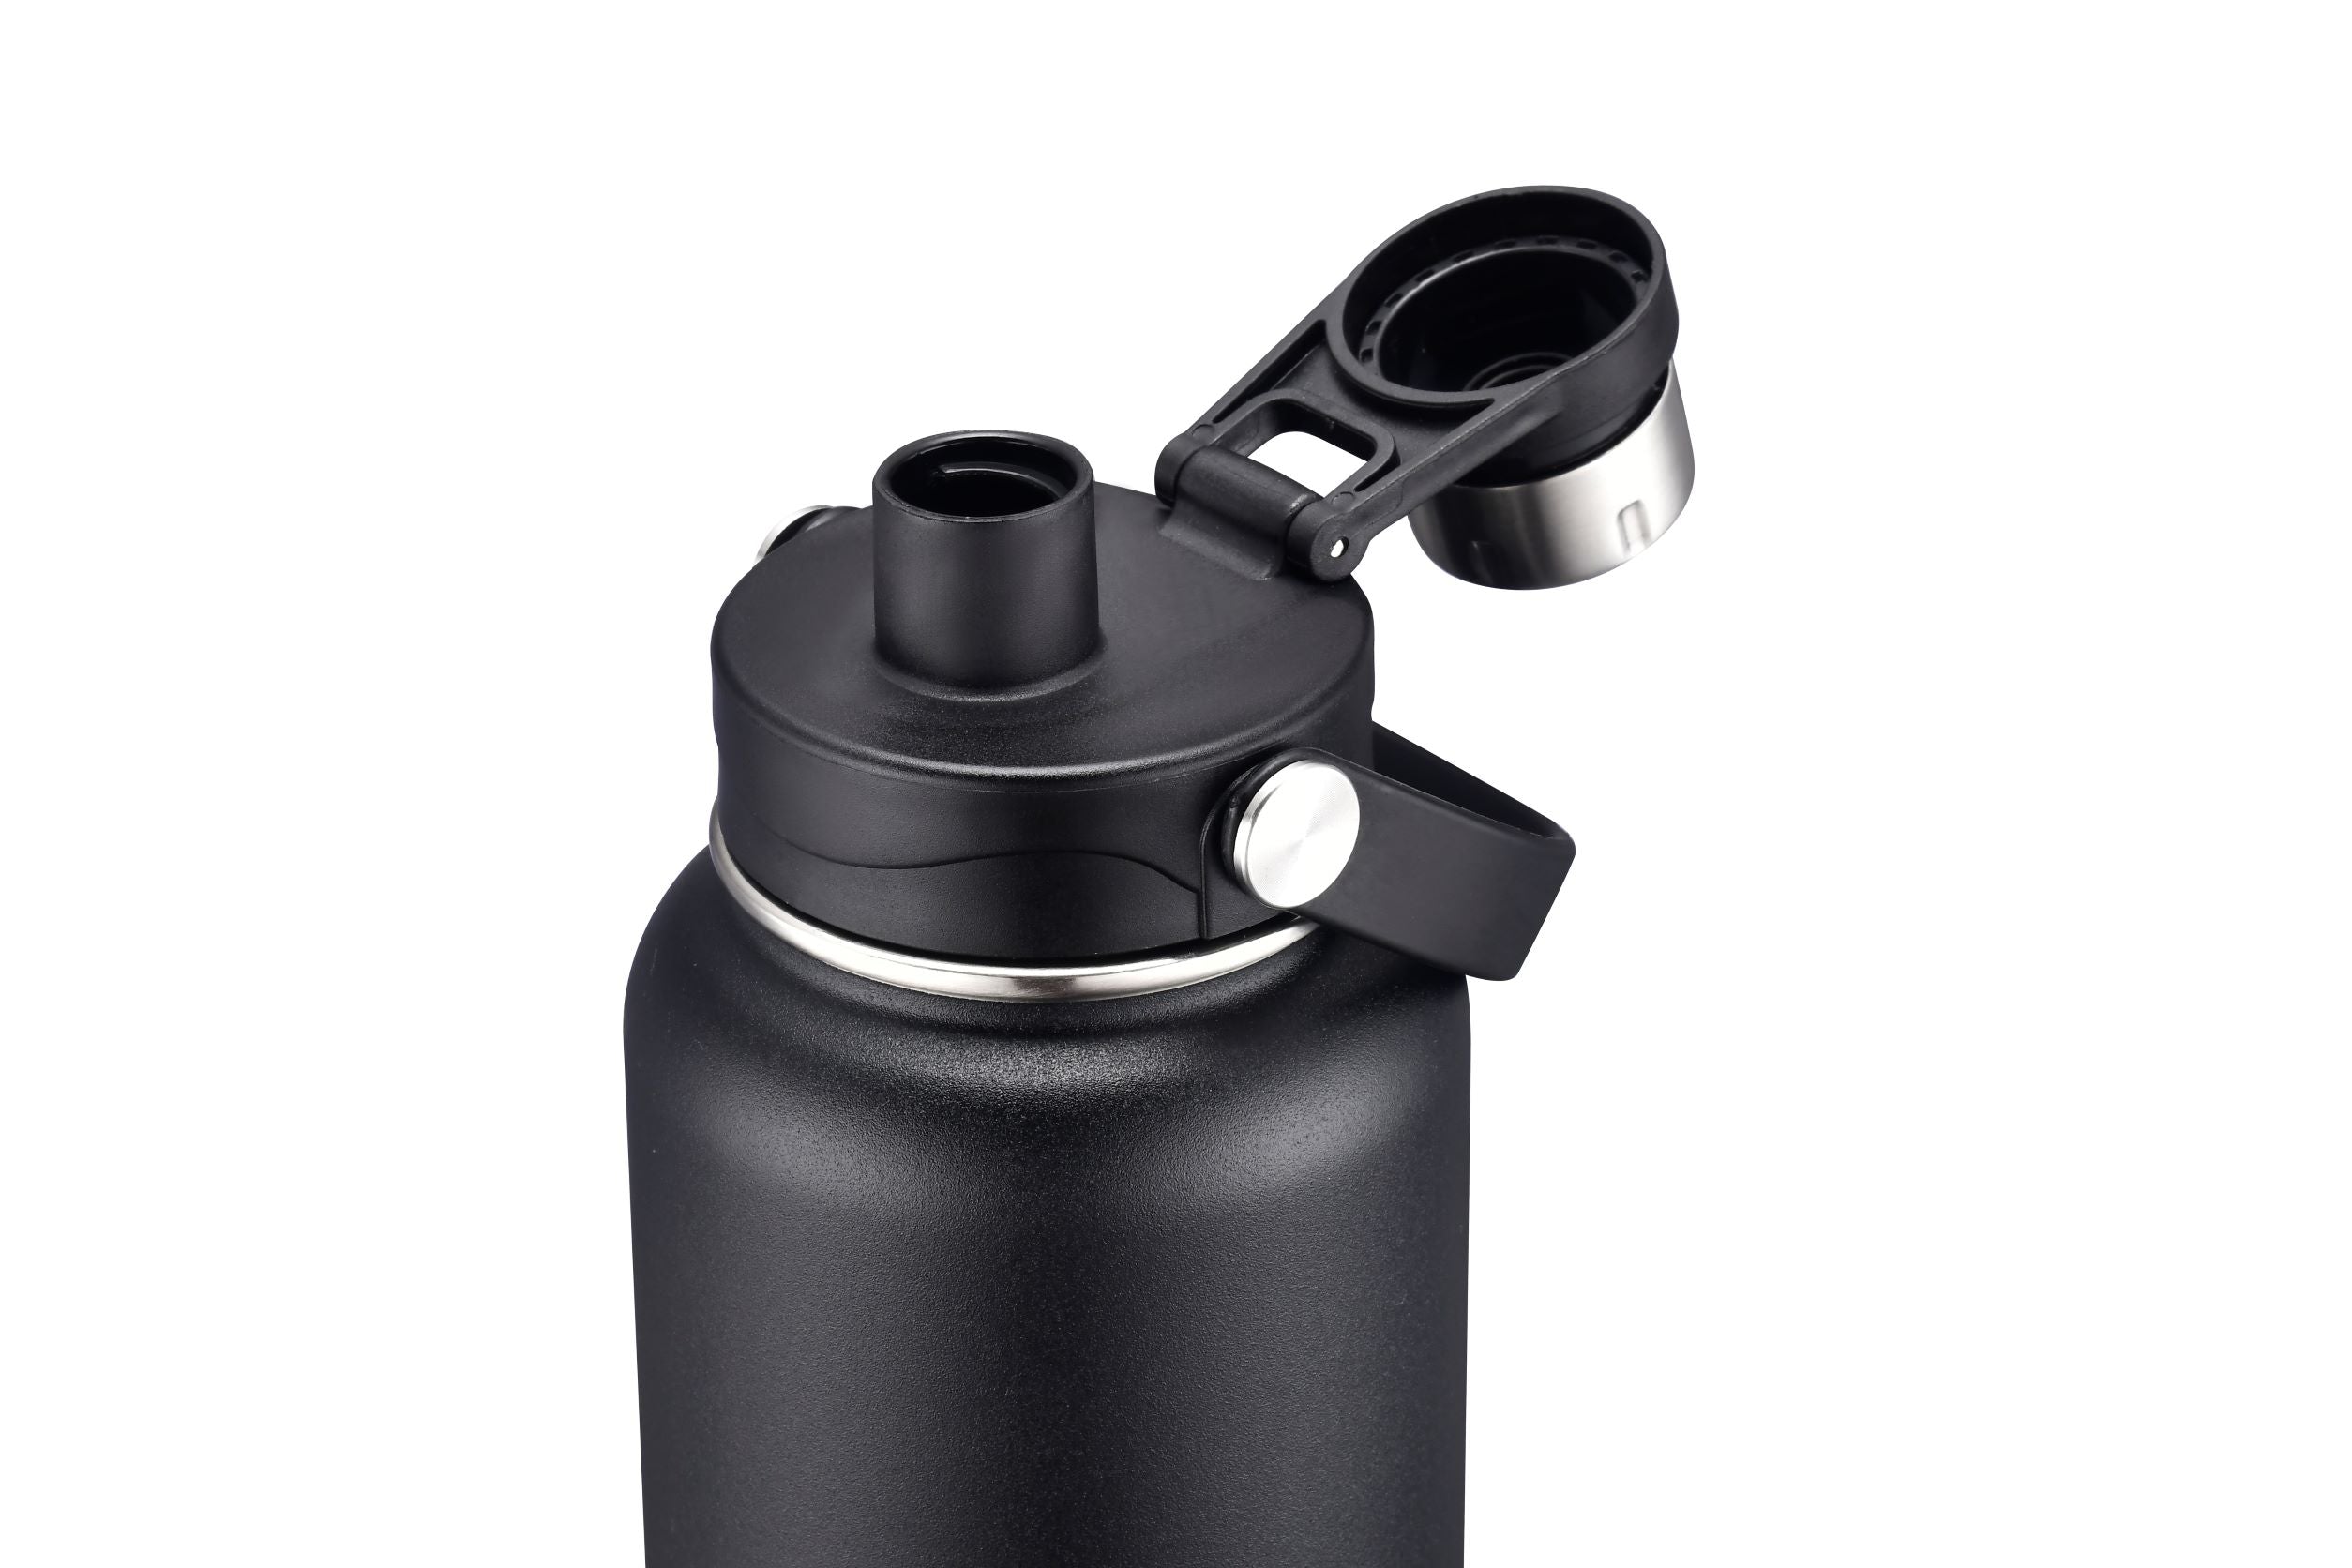 LS-909 - 34oz Vacuum Water Bottle